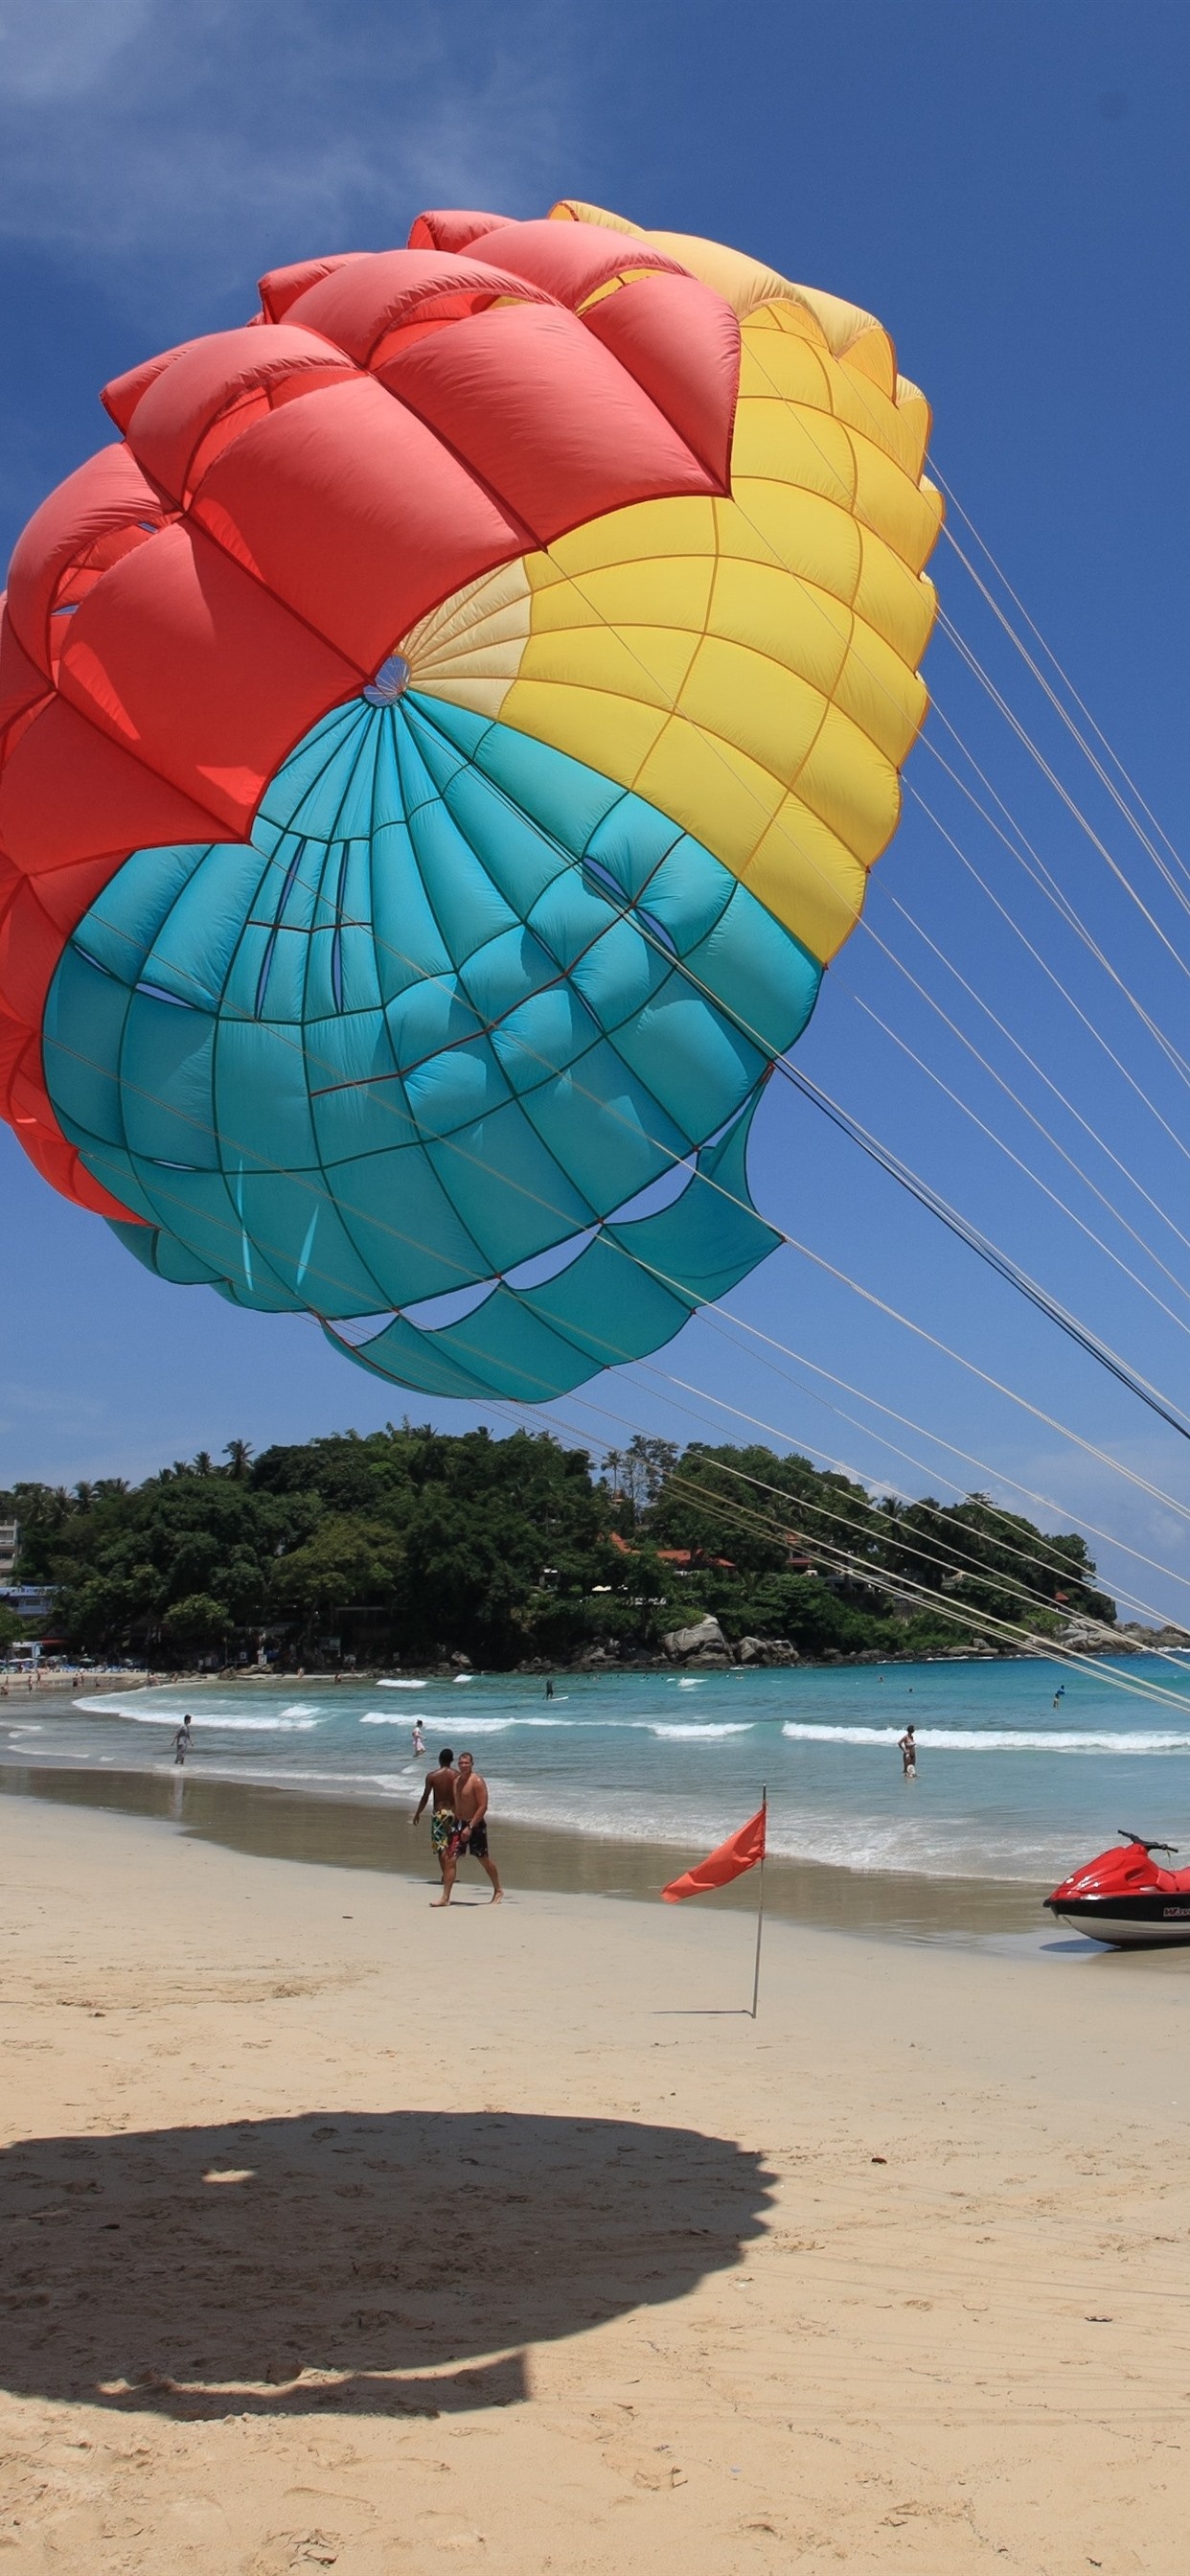 Parasailing: A popular sports activity, A beautifully colored parachute, Parasailers at the beach. 1250x2690 HD Wallpaper.